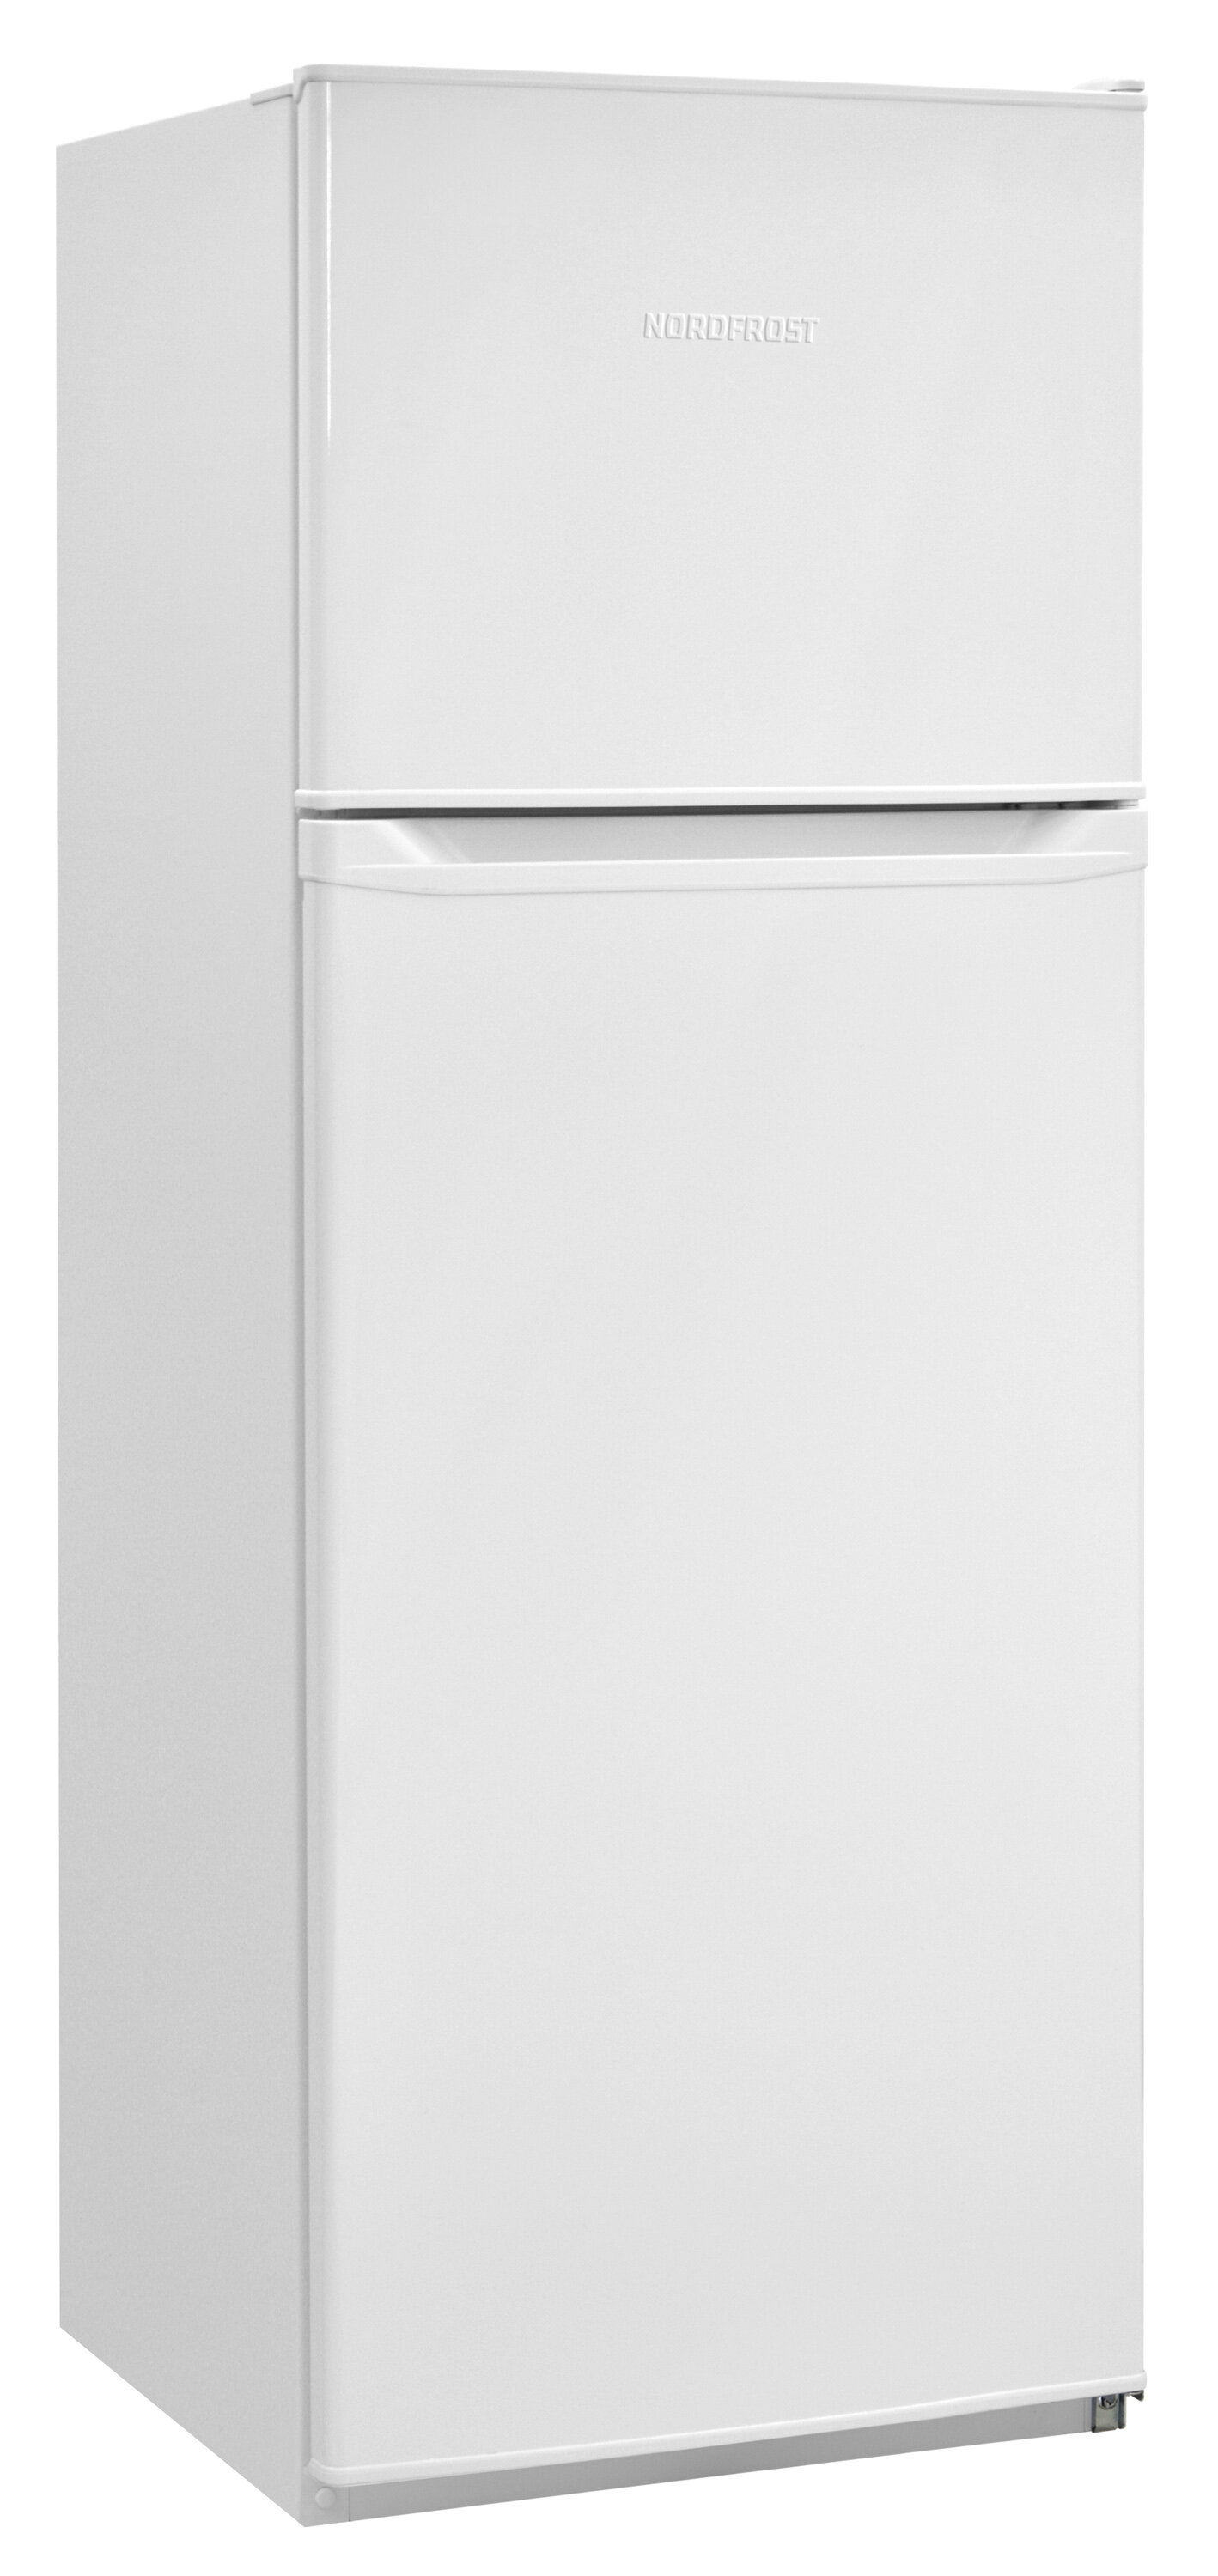 NORDFROST Холодильник Nordfrost NRT 145 032, двухкамерный, А+, белый (278л)